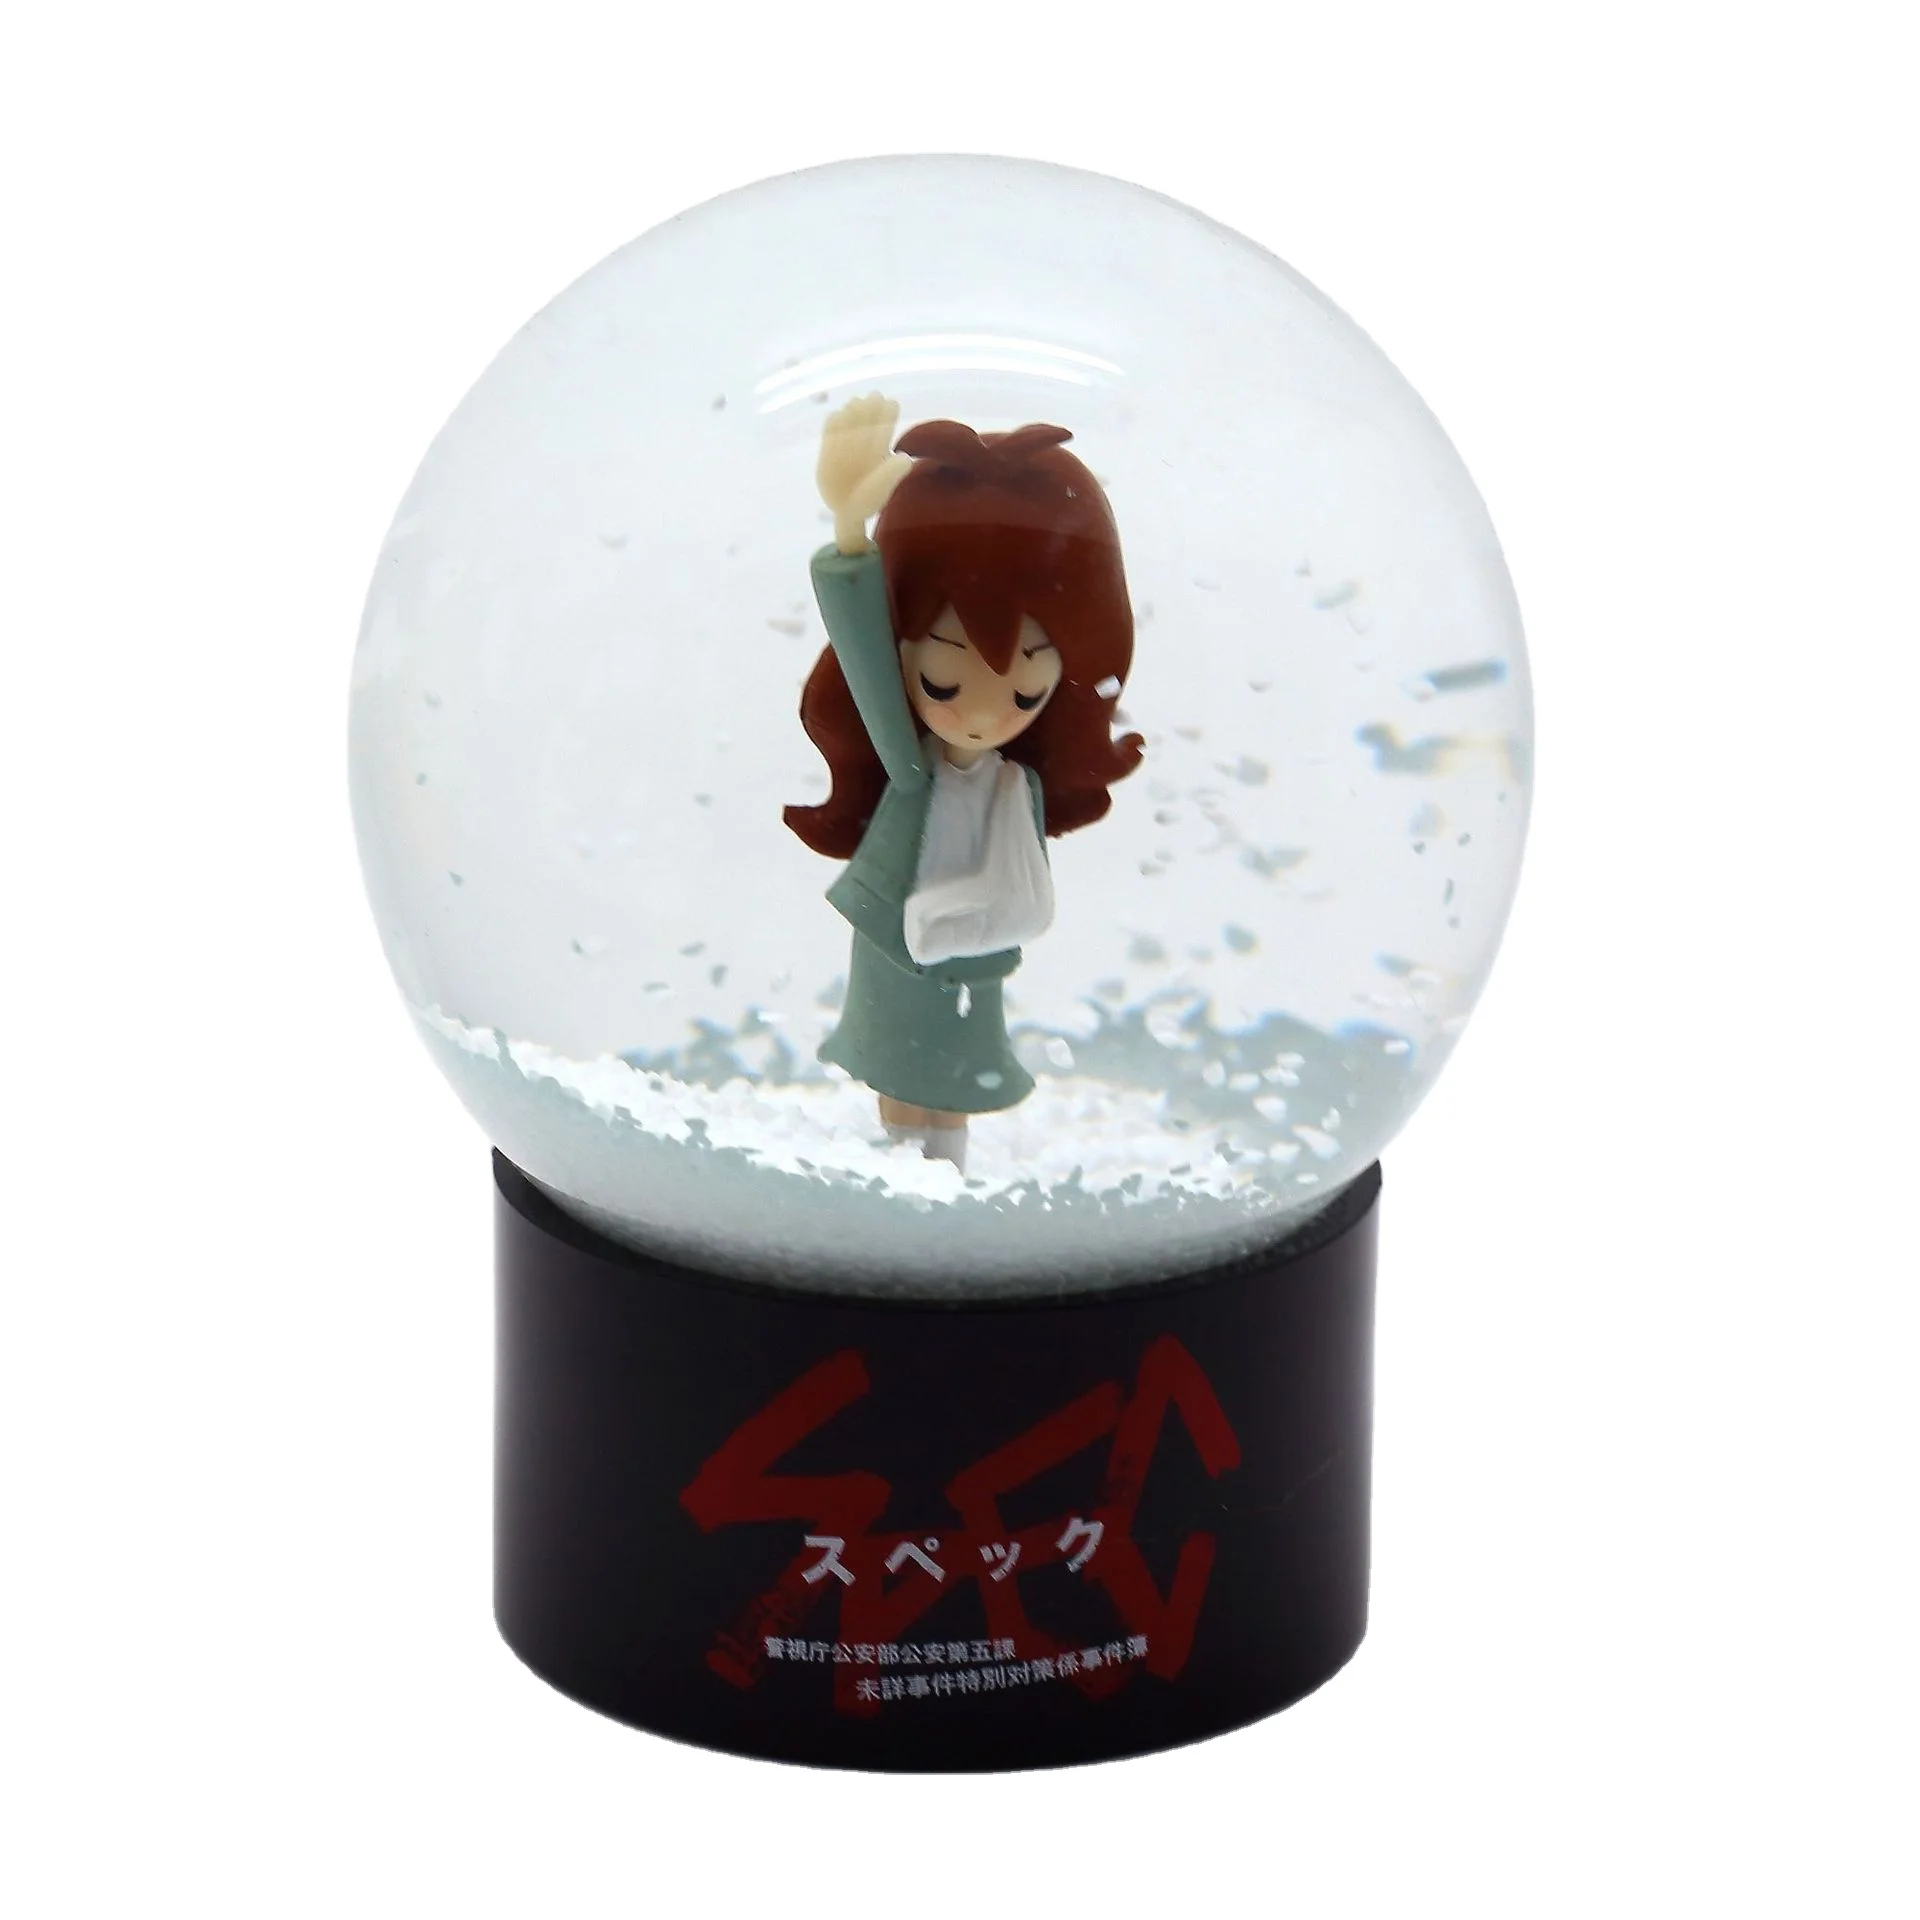 Amazon.com: Mitsuri Kanroji Figure Demon Anime Toy Statue Sitting with Rice  Balls Collectible Desk Prop : Toys & Games